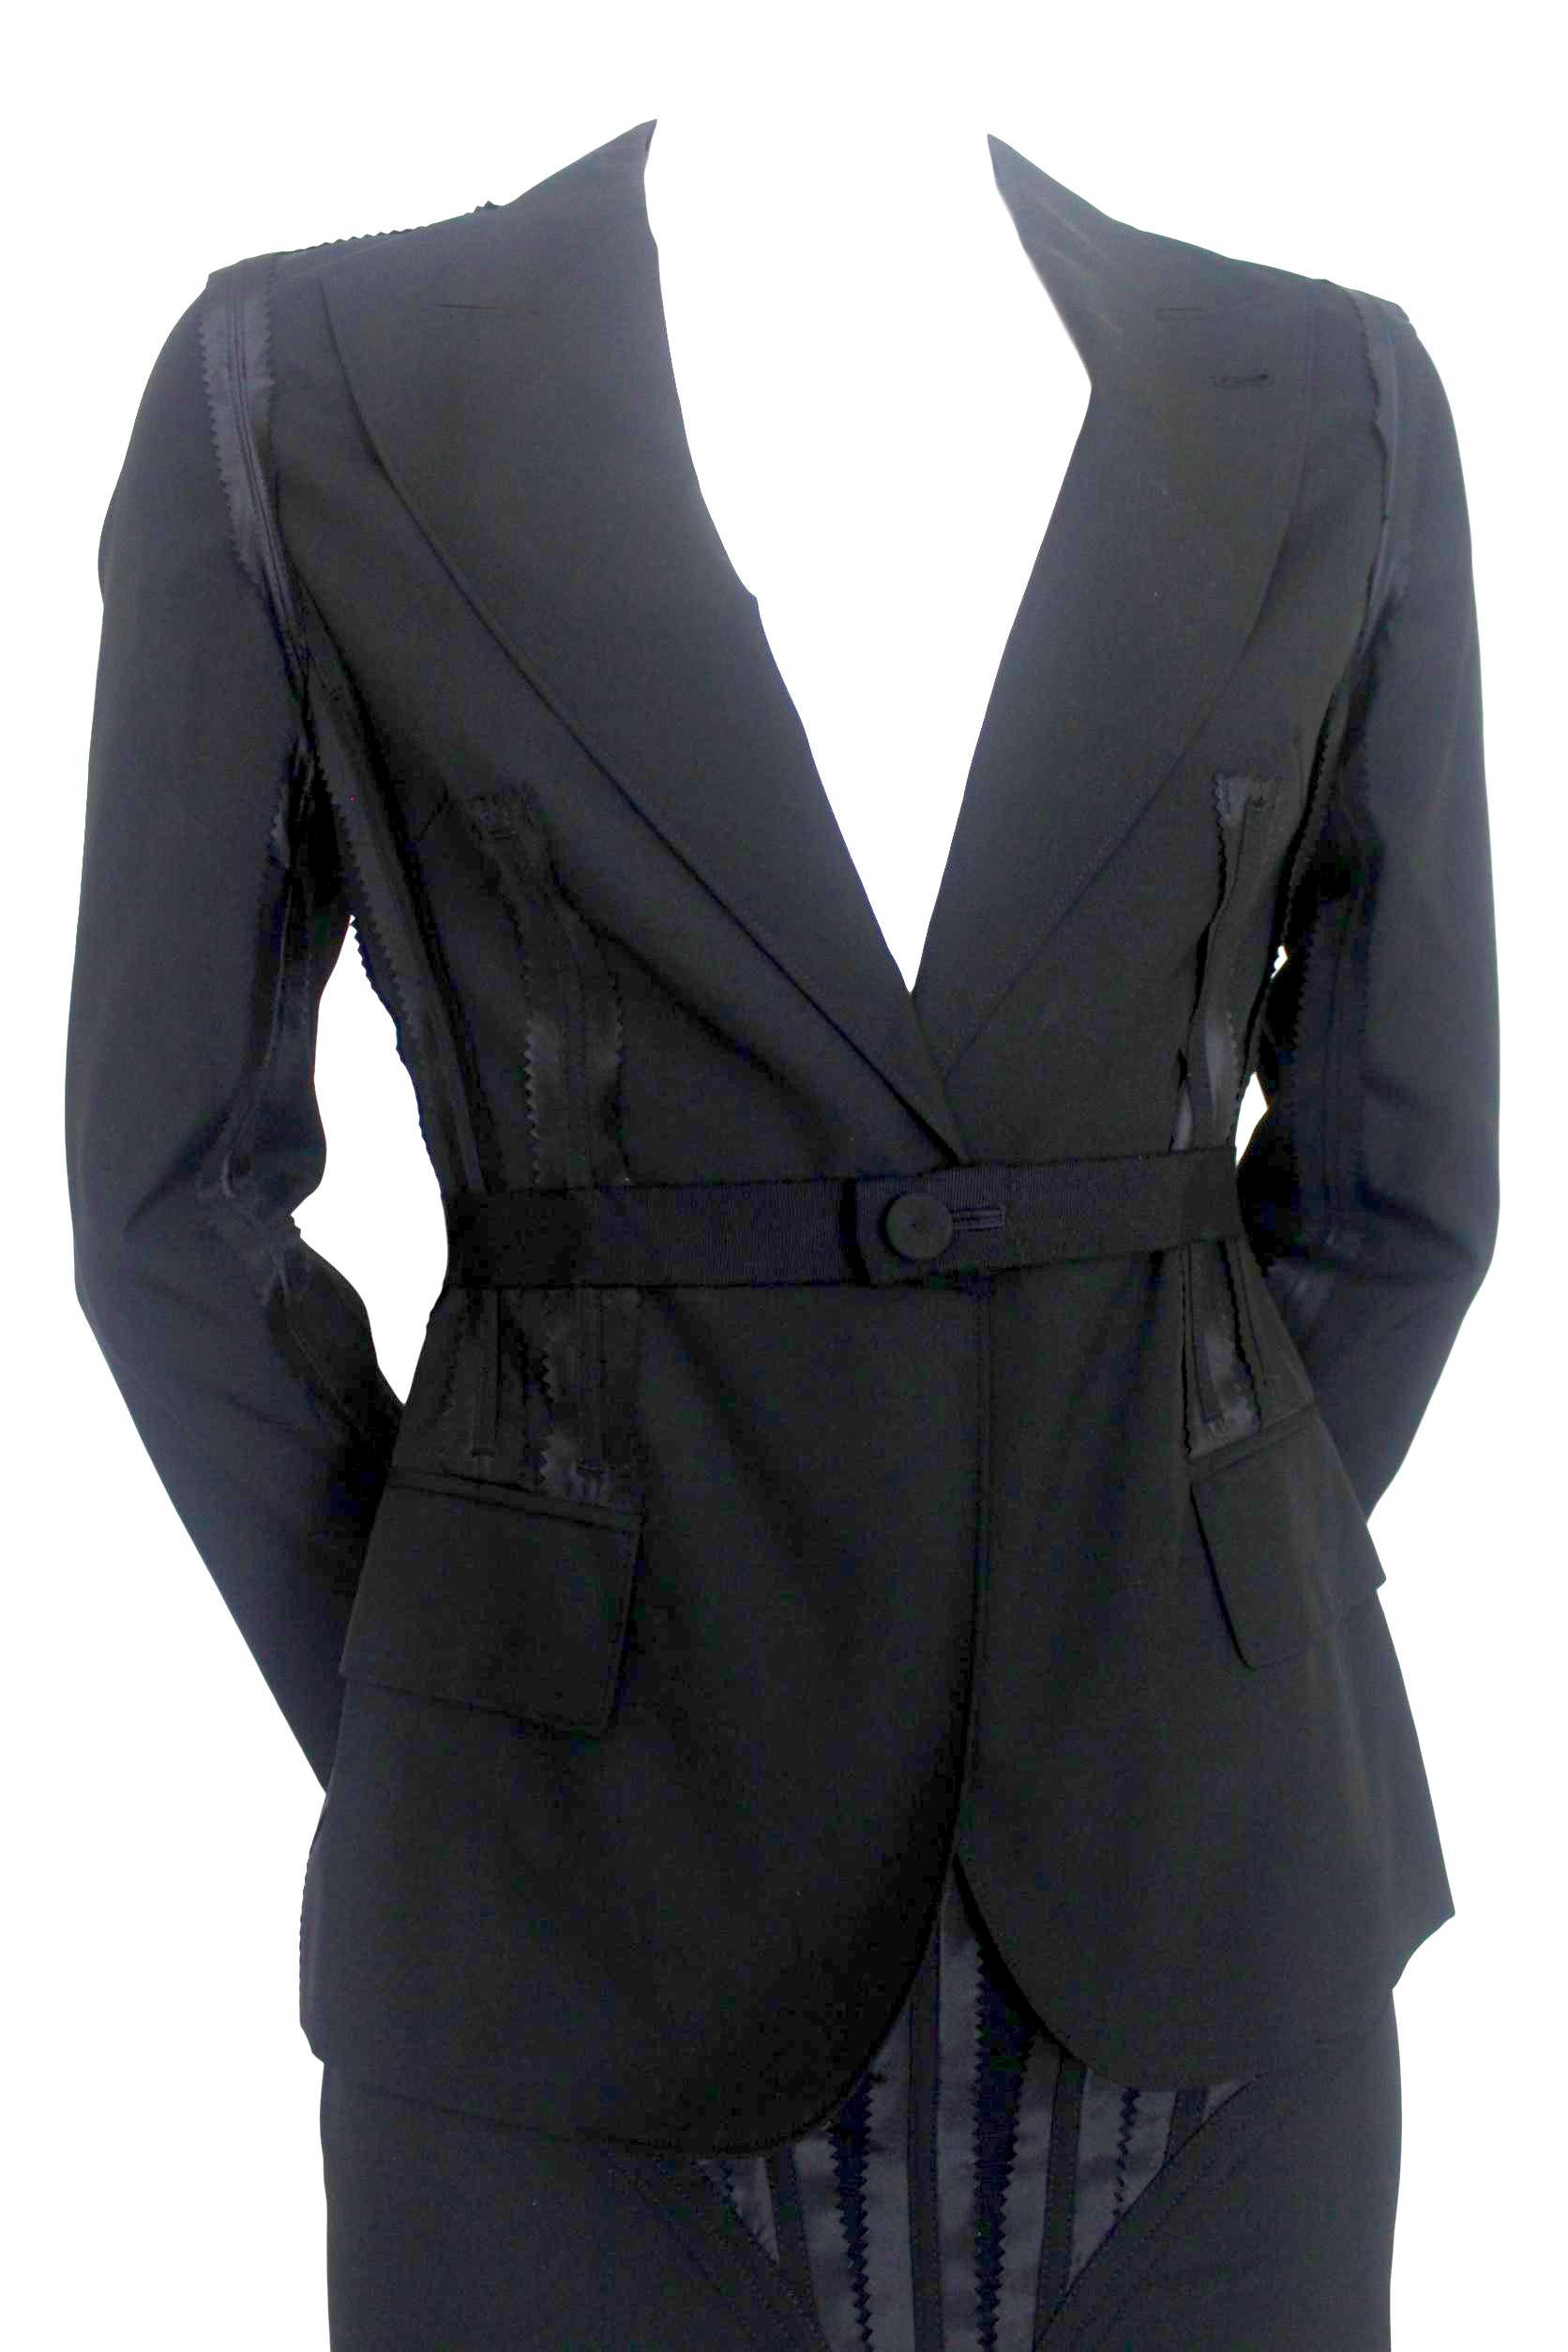 Jean Paul Gaultier 1990s Corset Jacket and Skirt Suit 6